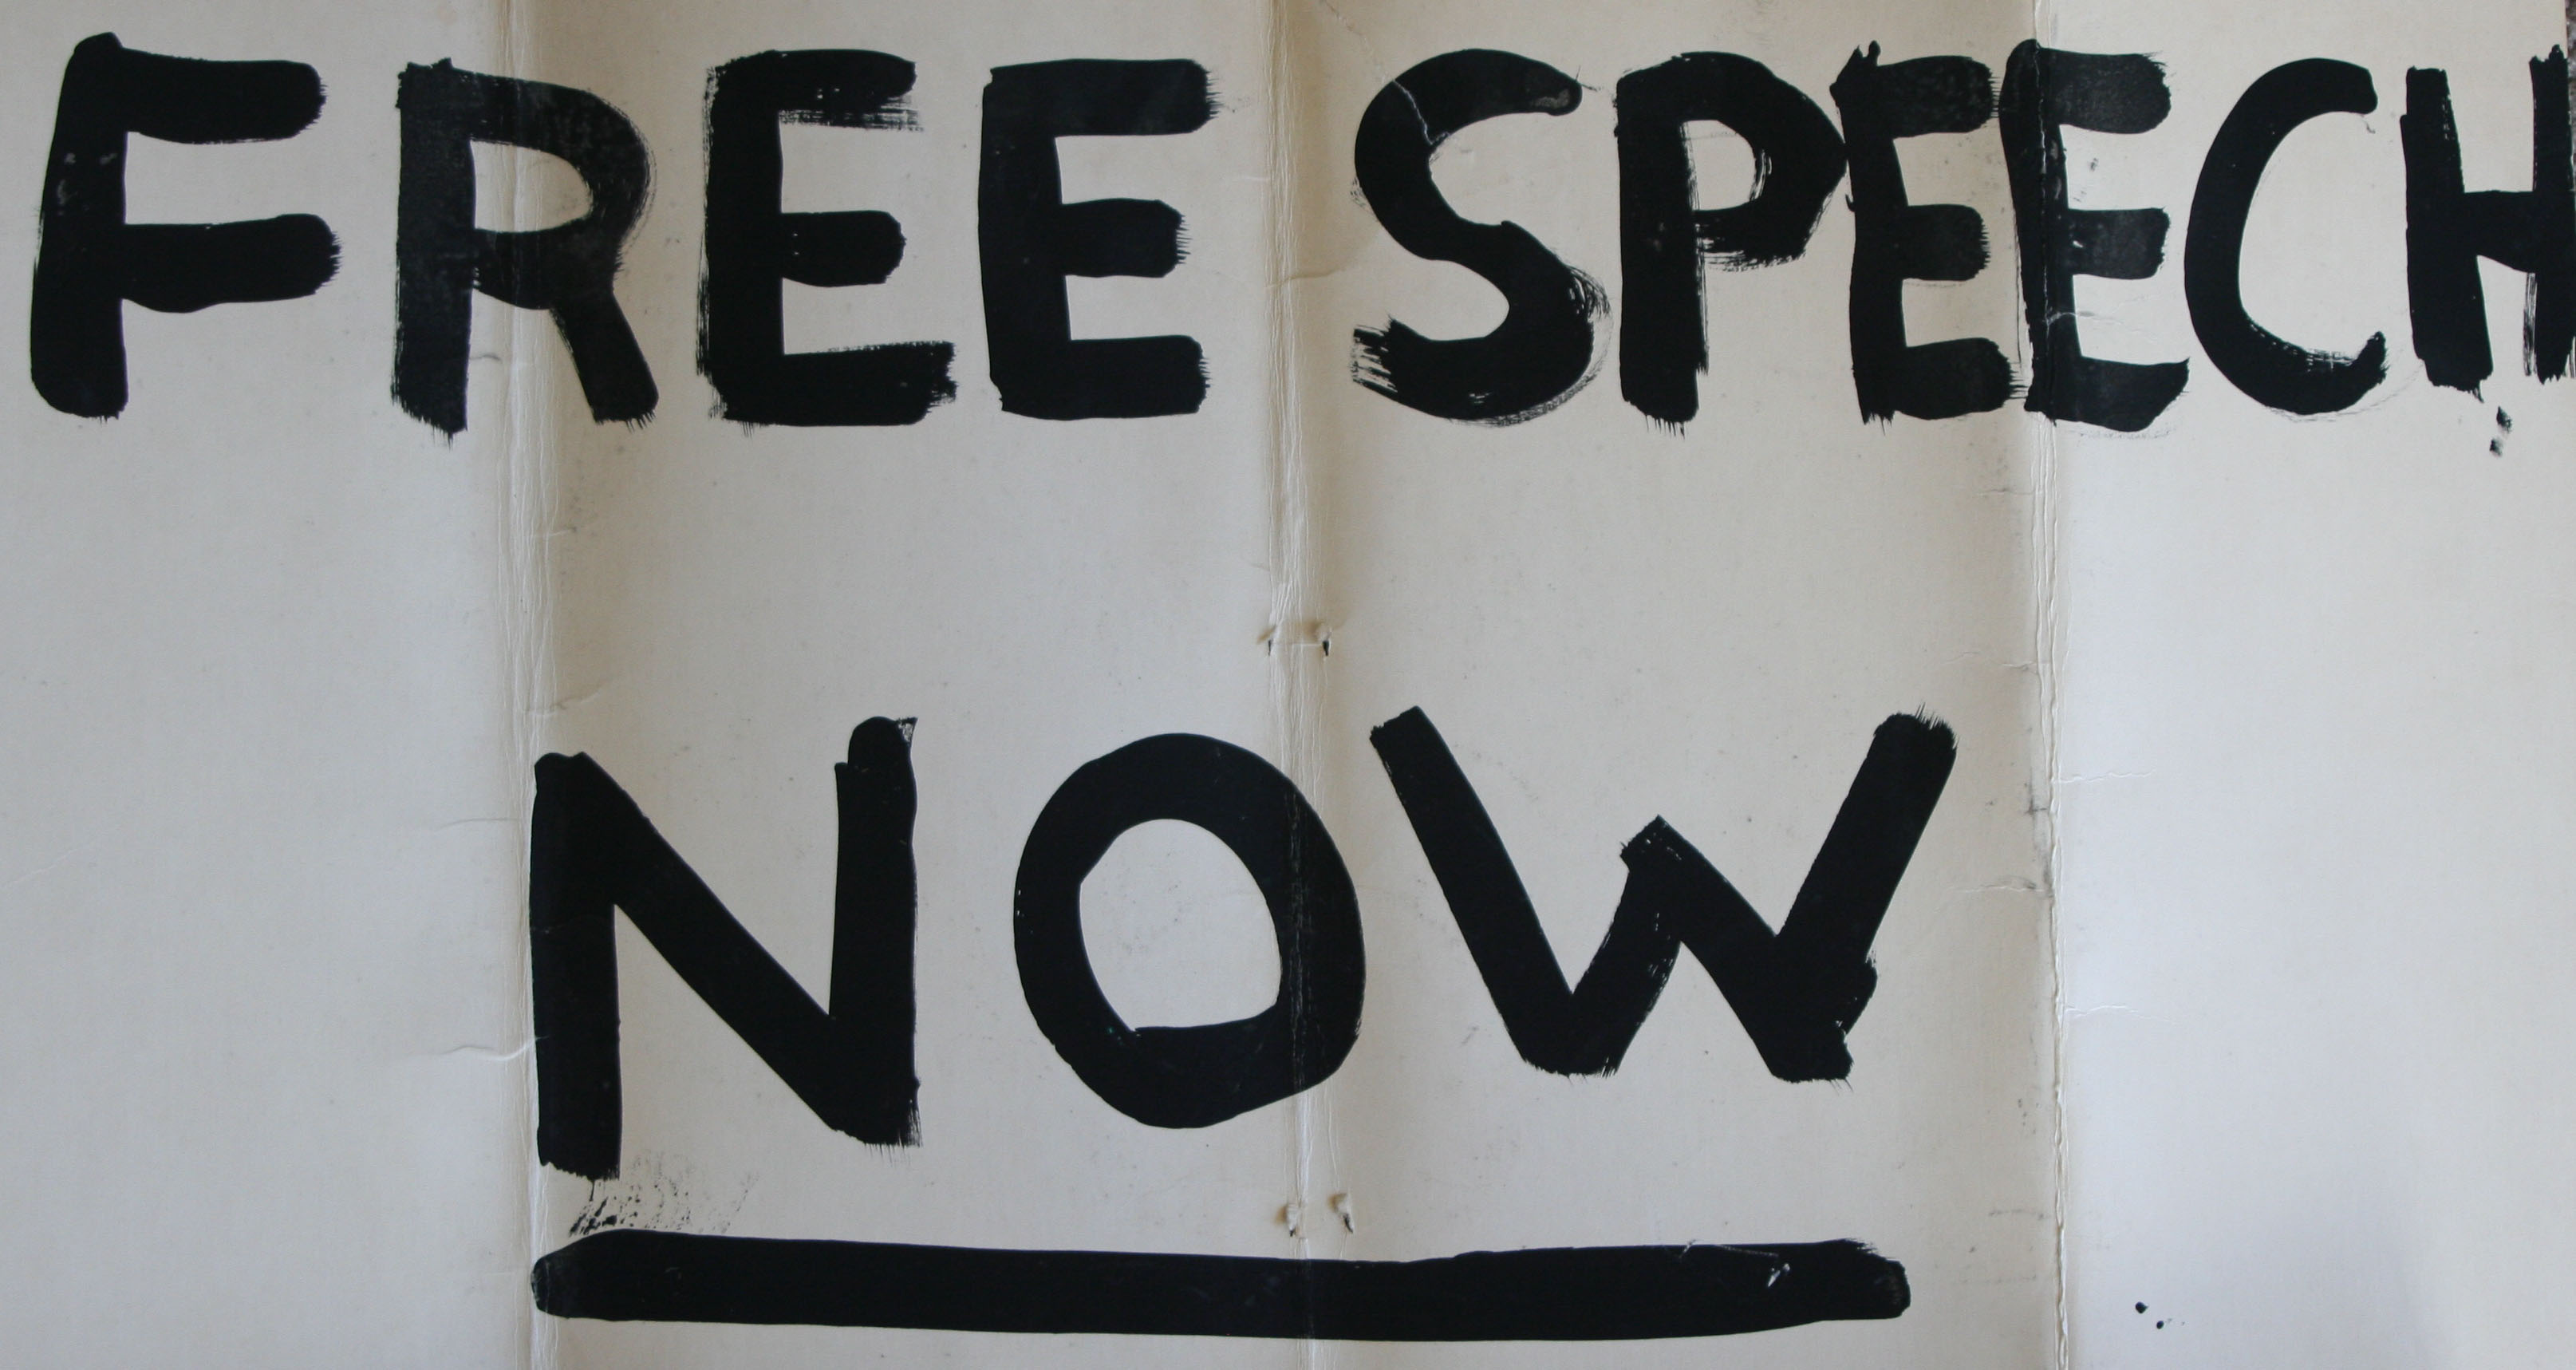 free-speech-sign